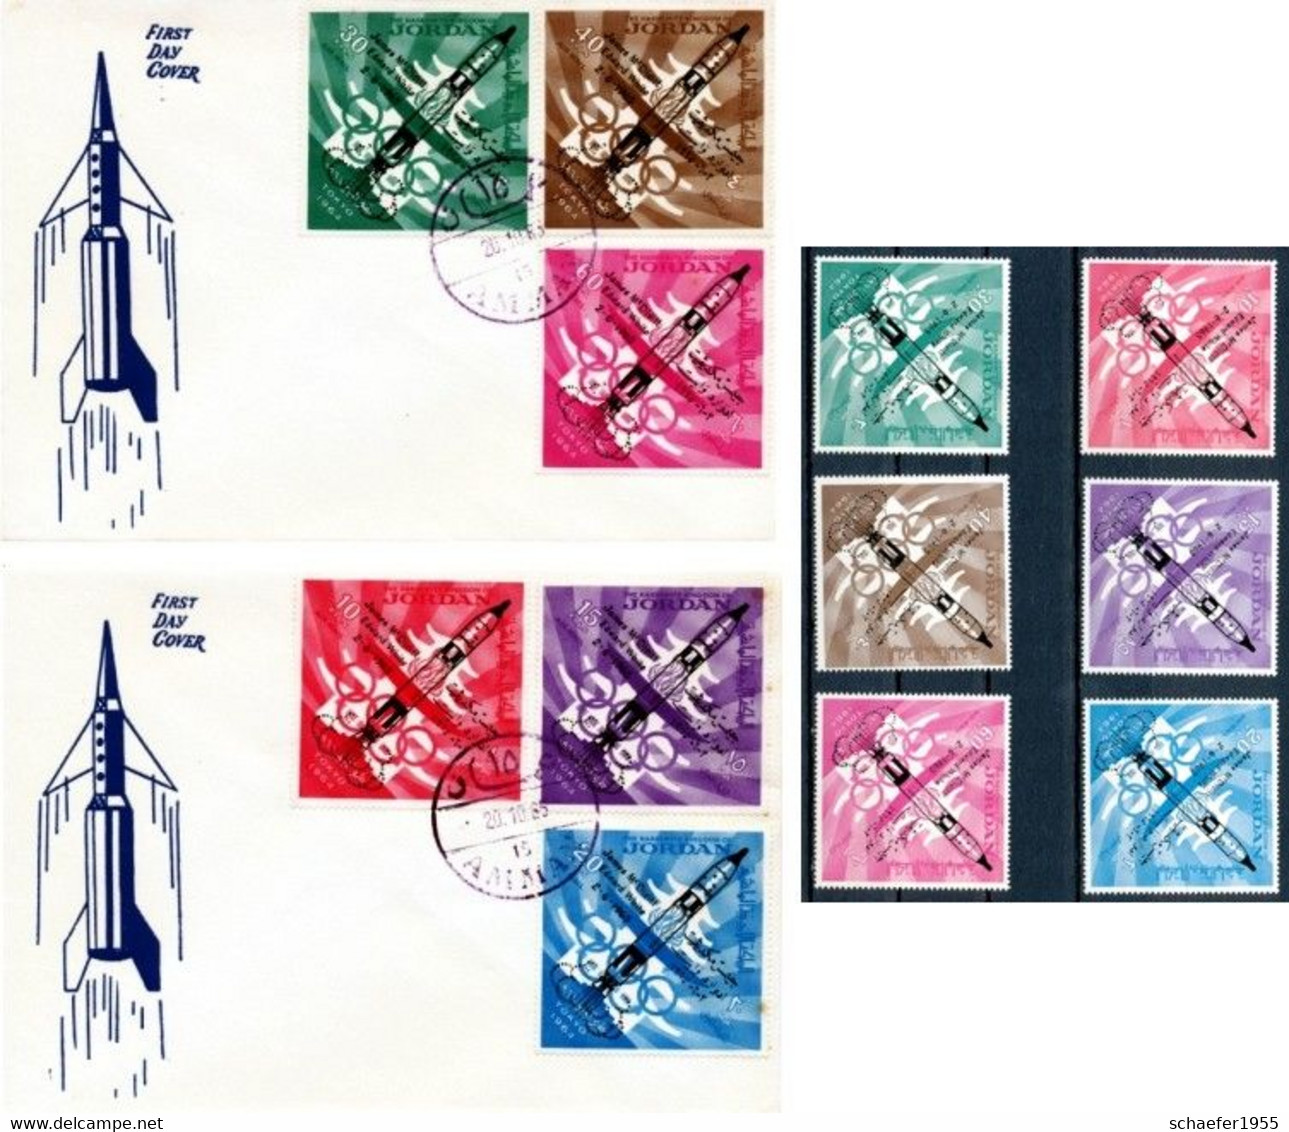 Jordanien, Jordan 1965 Spaceflight 2x FDC + Stamps, Perf, Overp.  Mac Devitt And Edward White - Azië